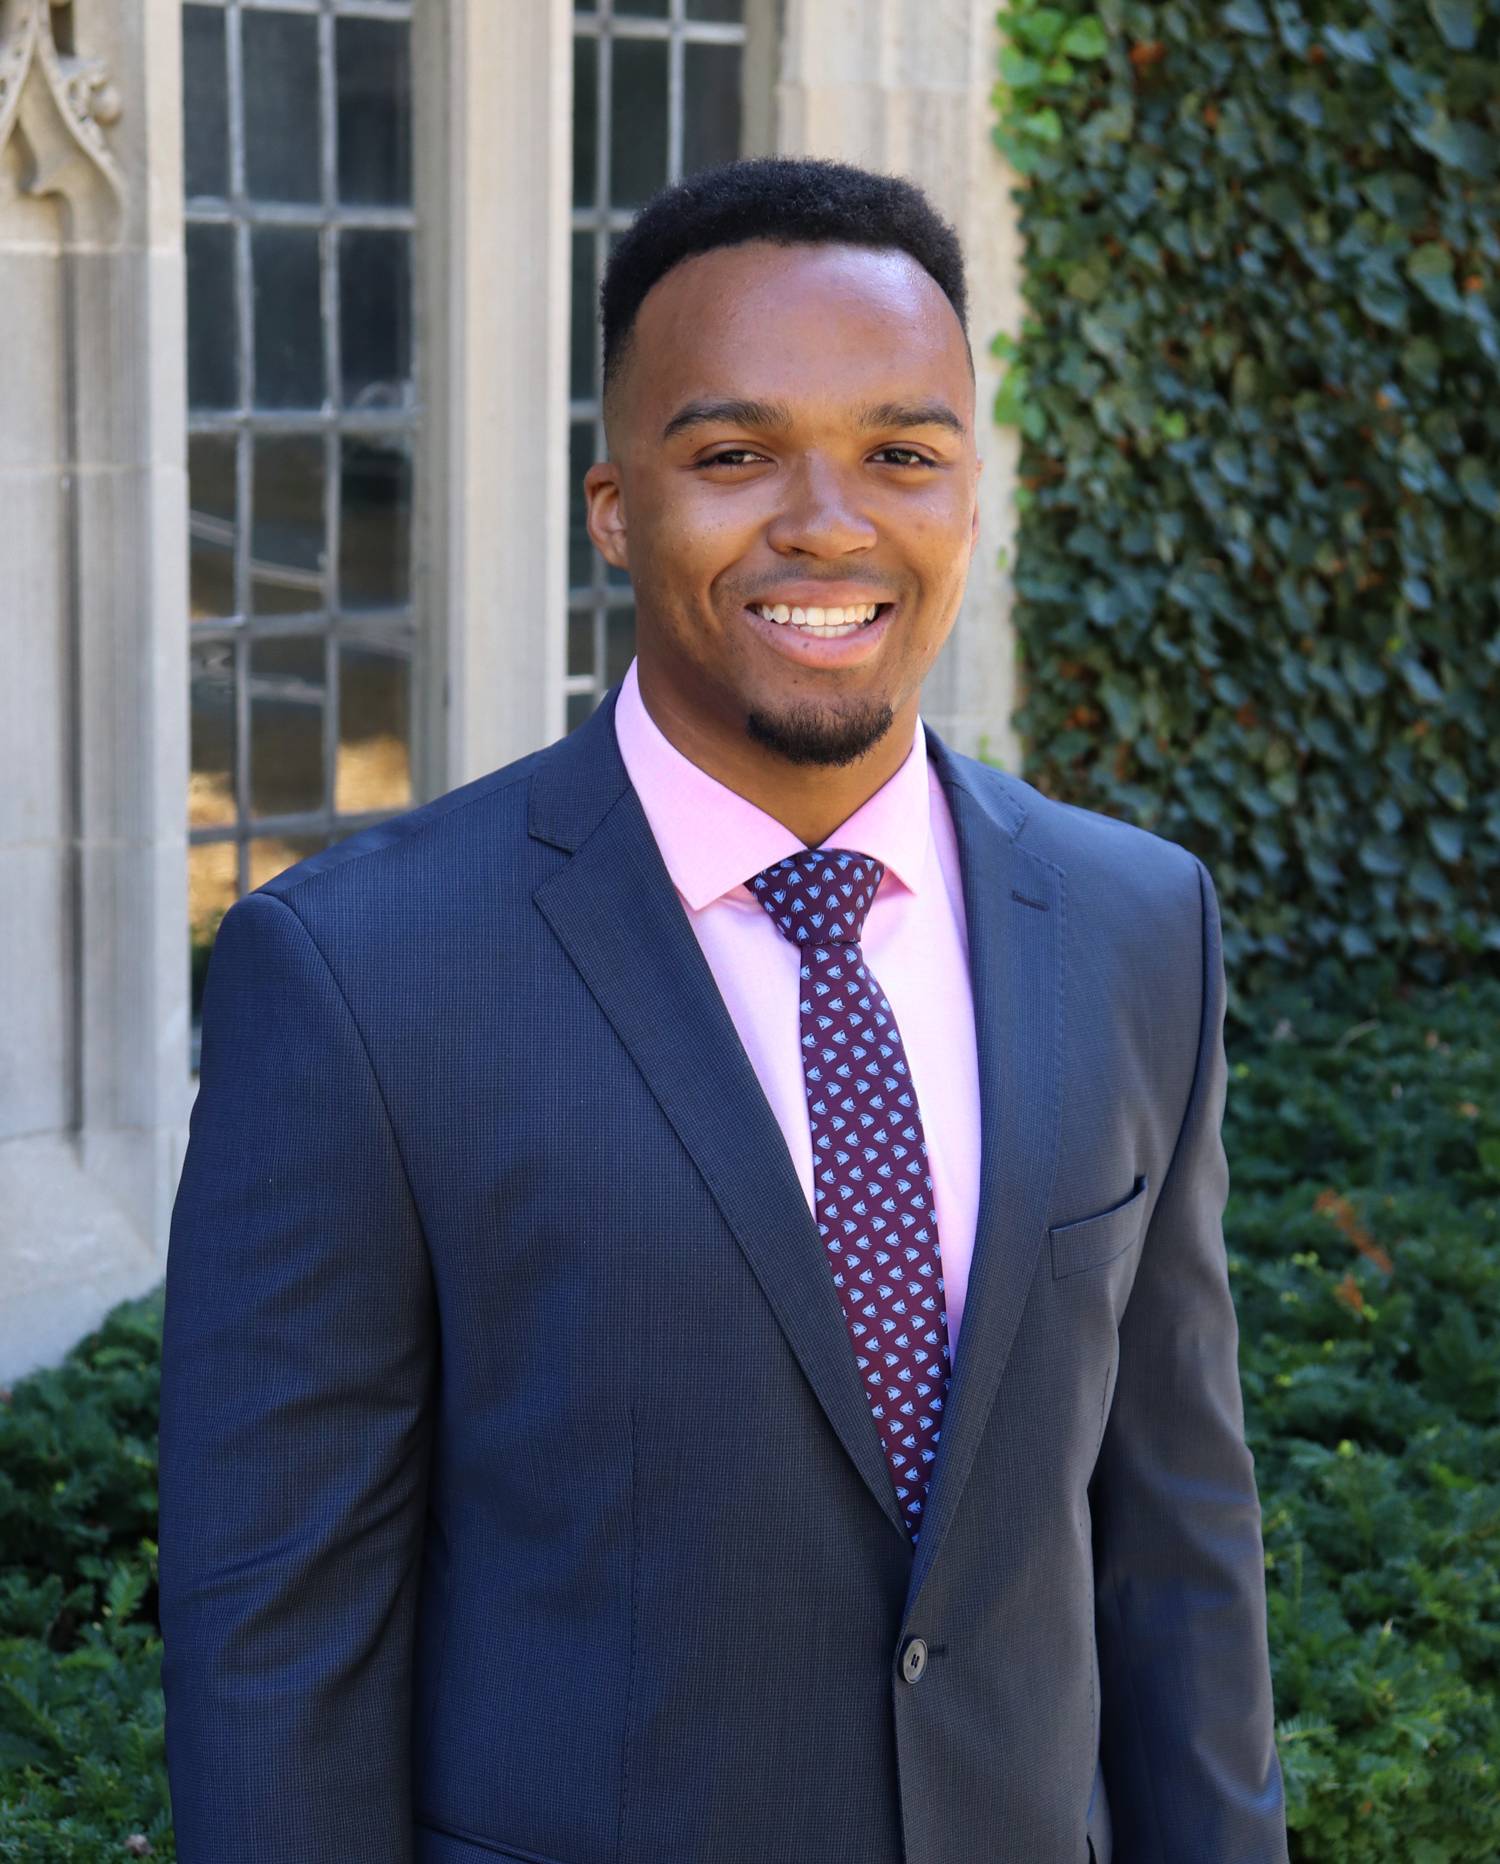 Nicholas Johnson is Princeton's first Black Valedictorian.